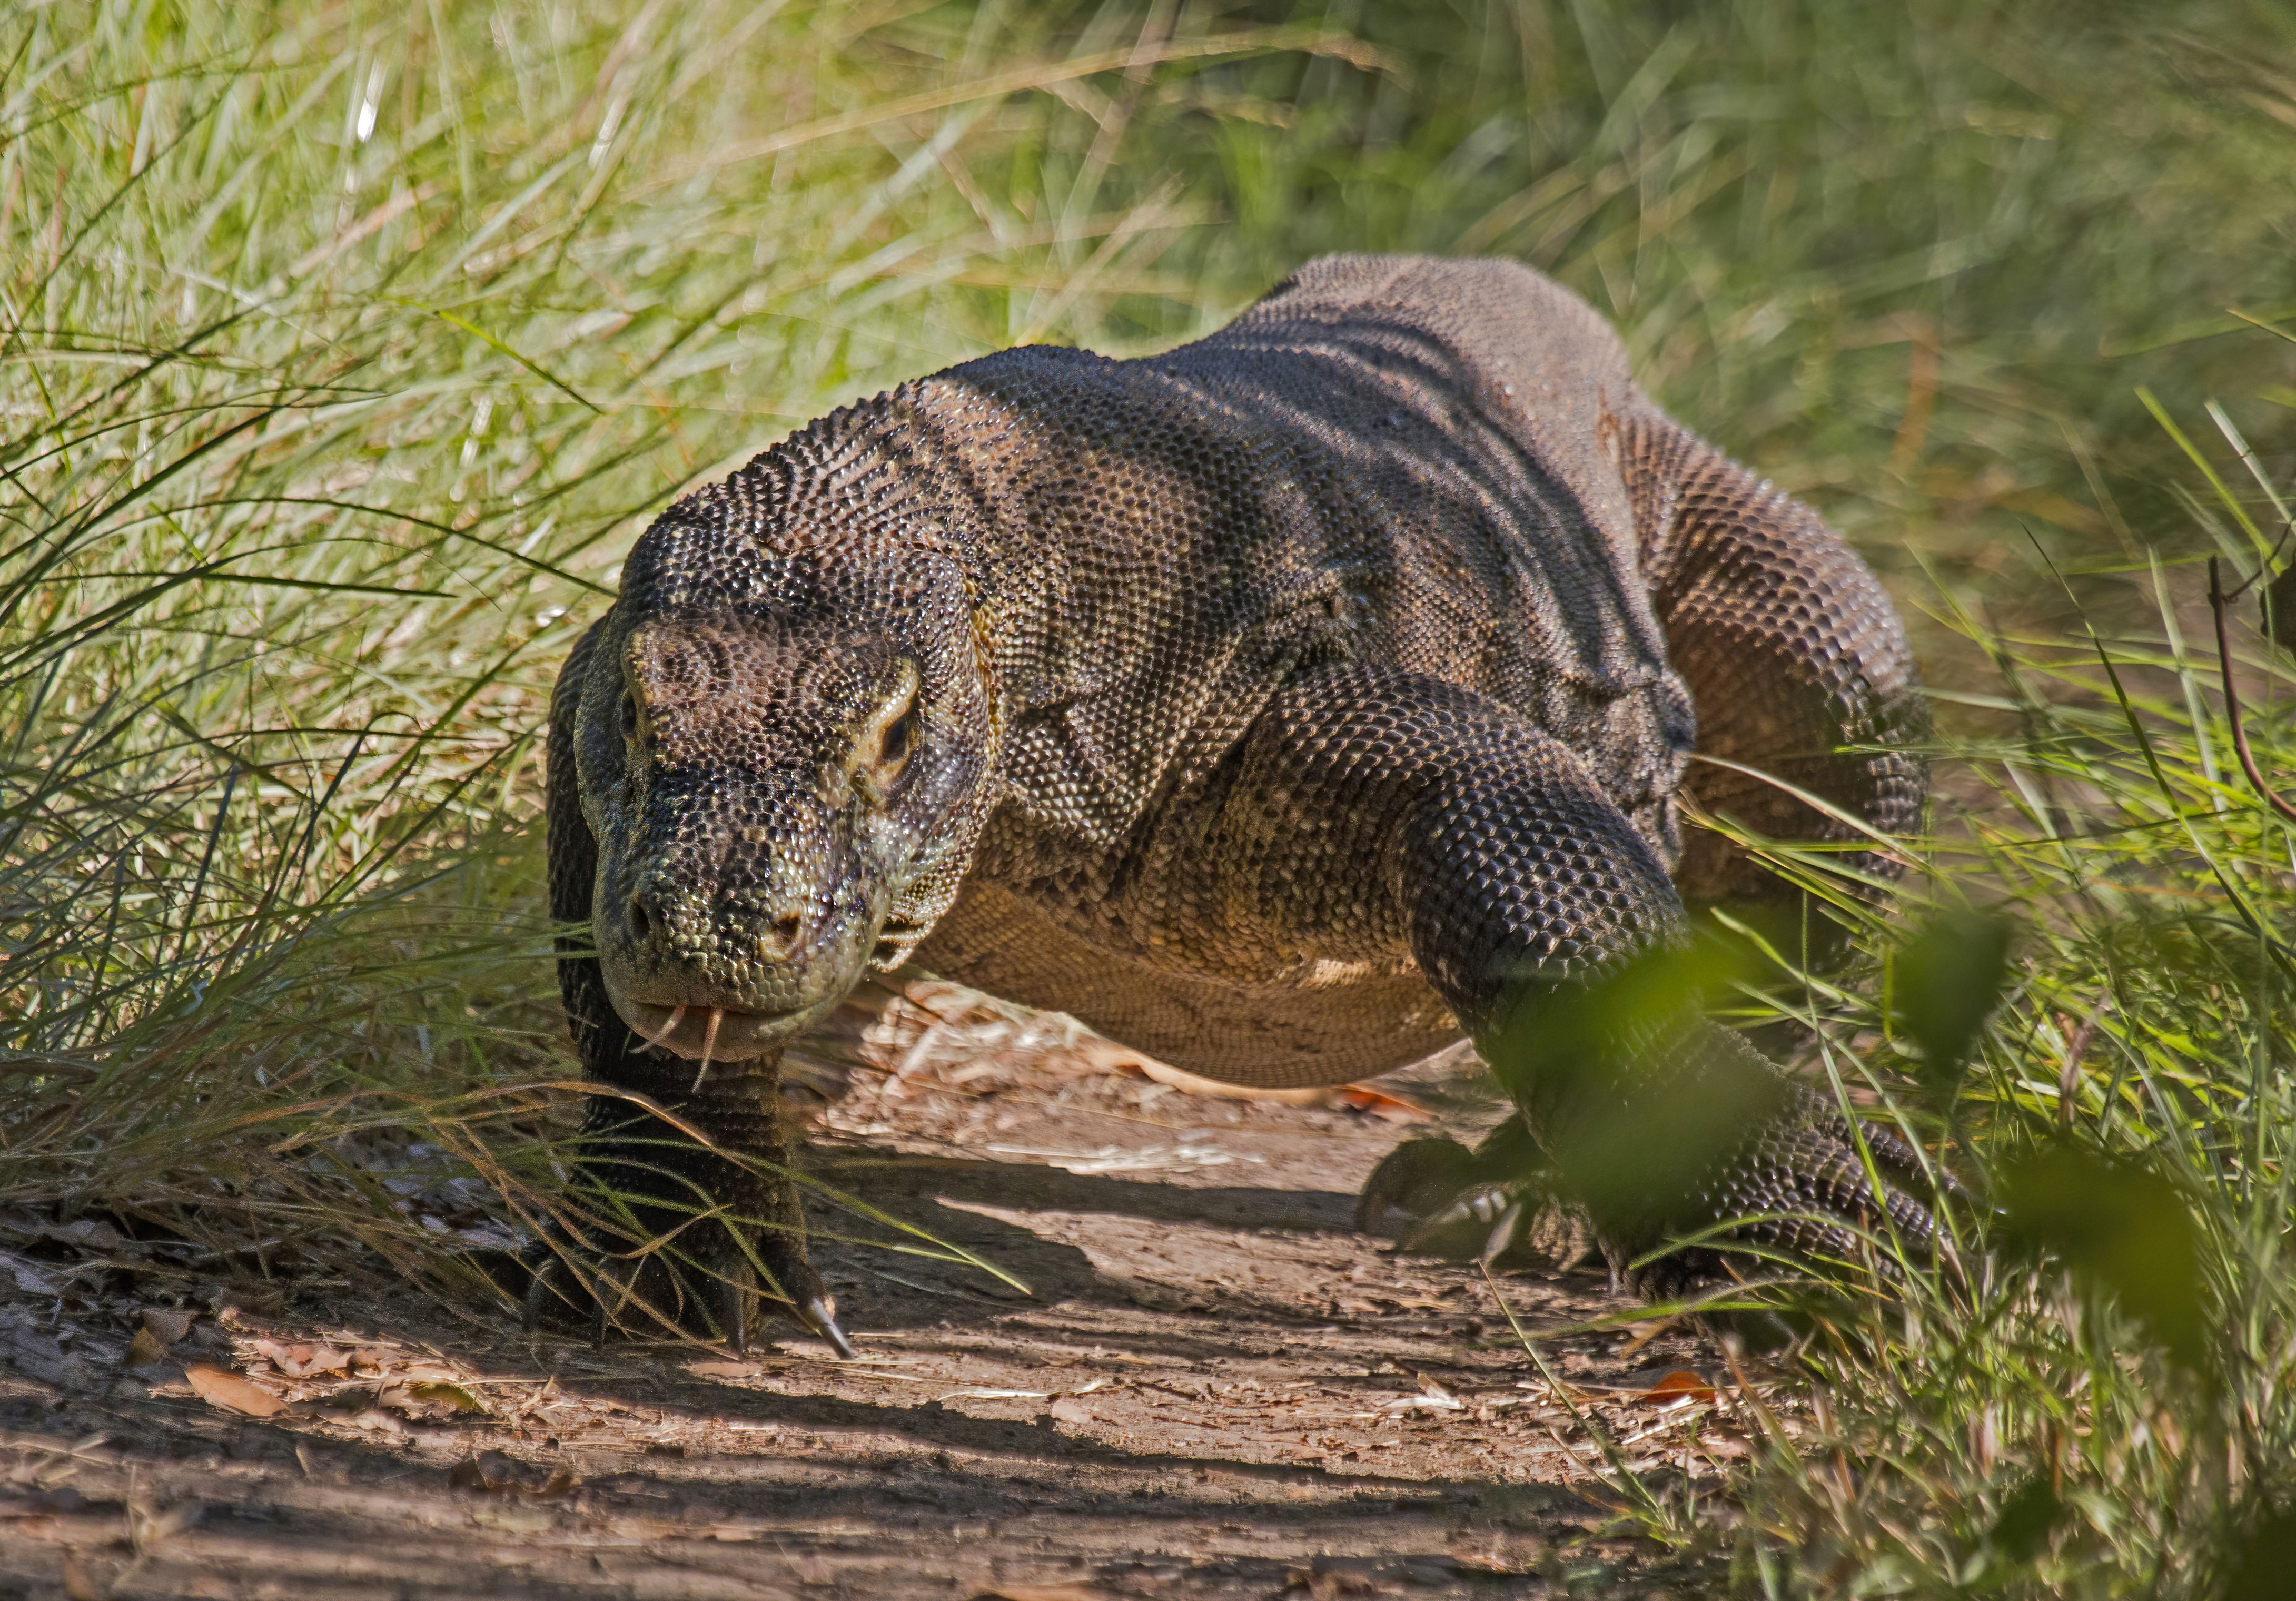 Is the Komodo dragon the most venomous lizard?